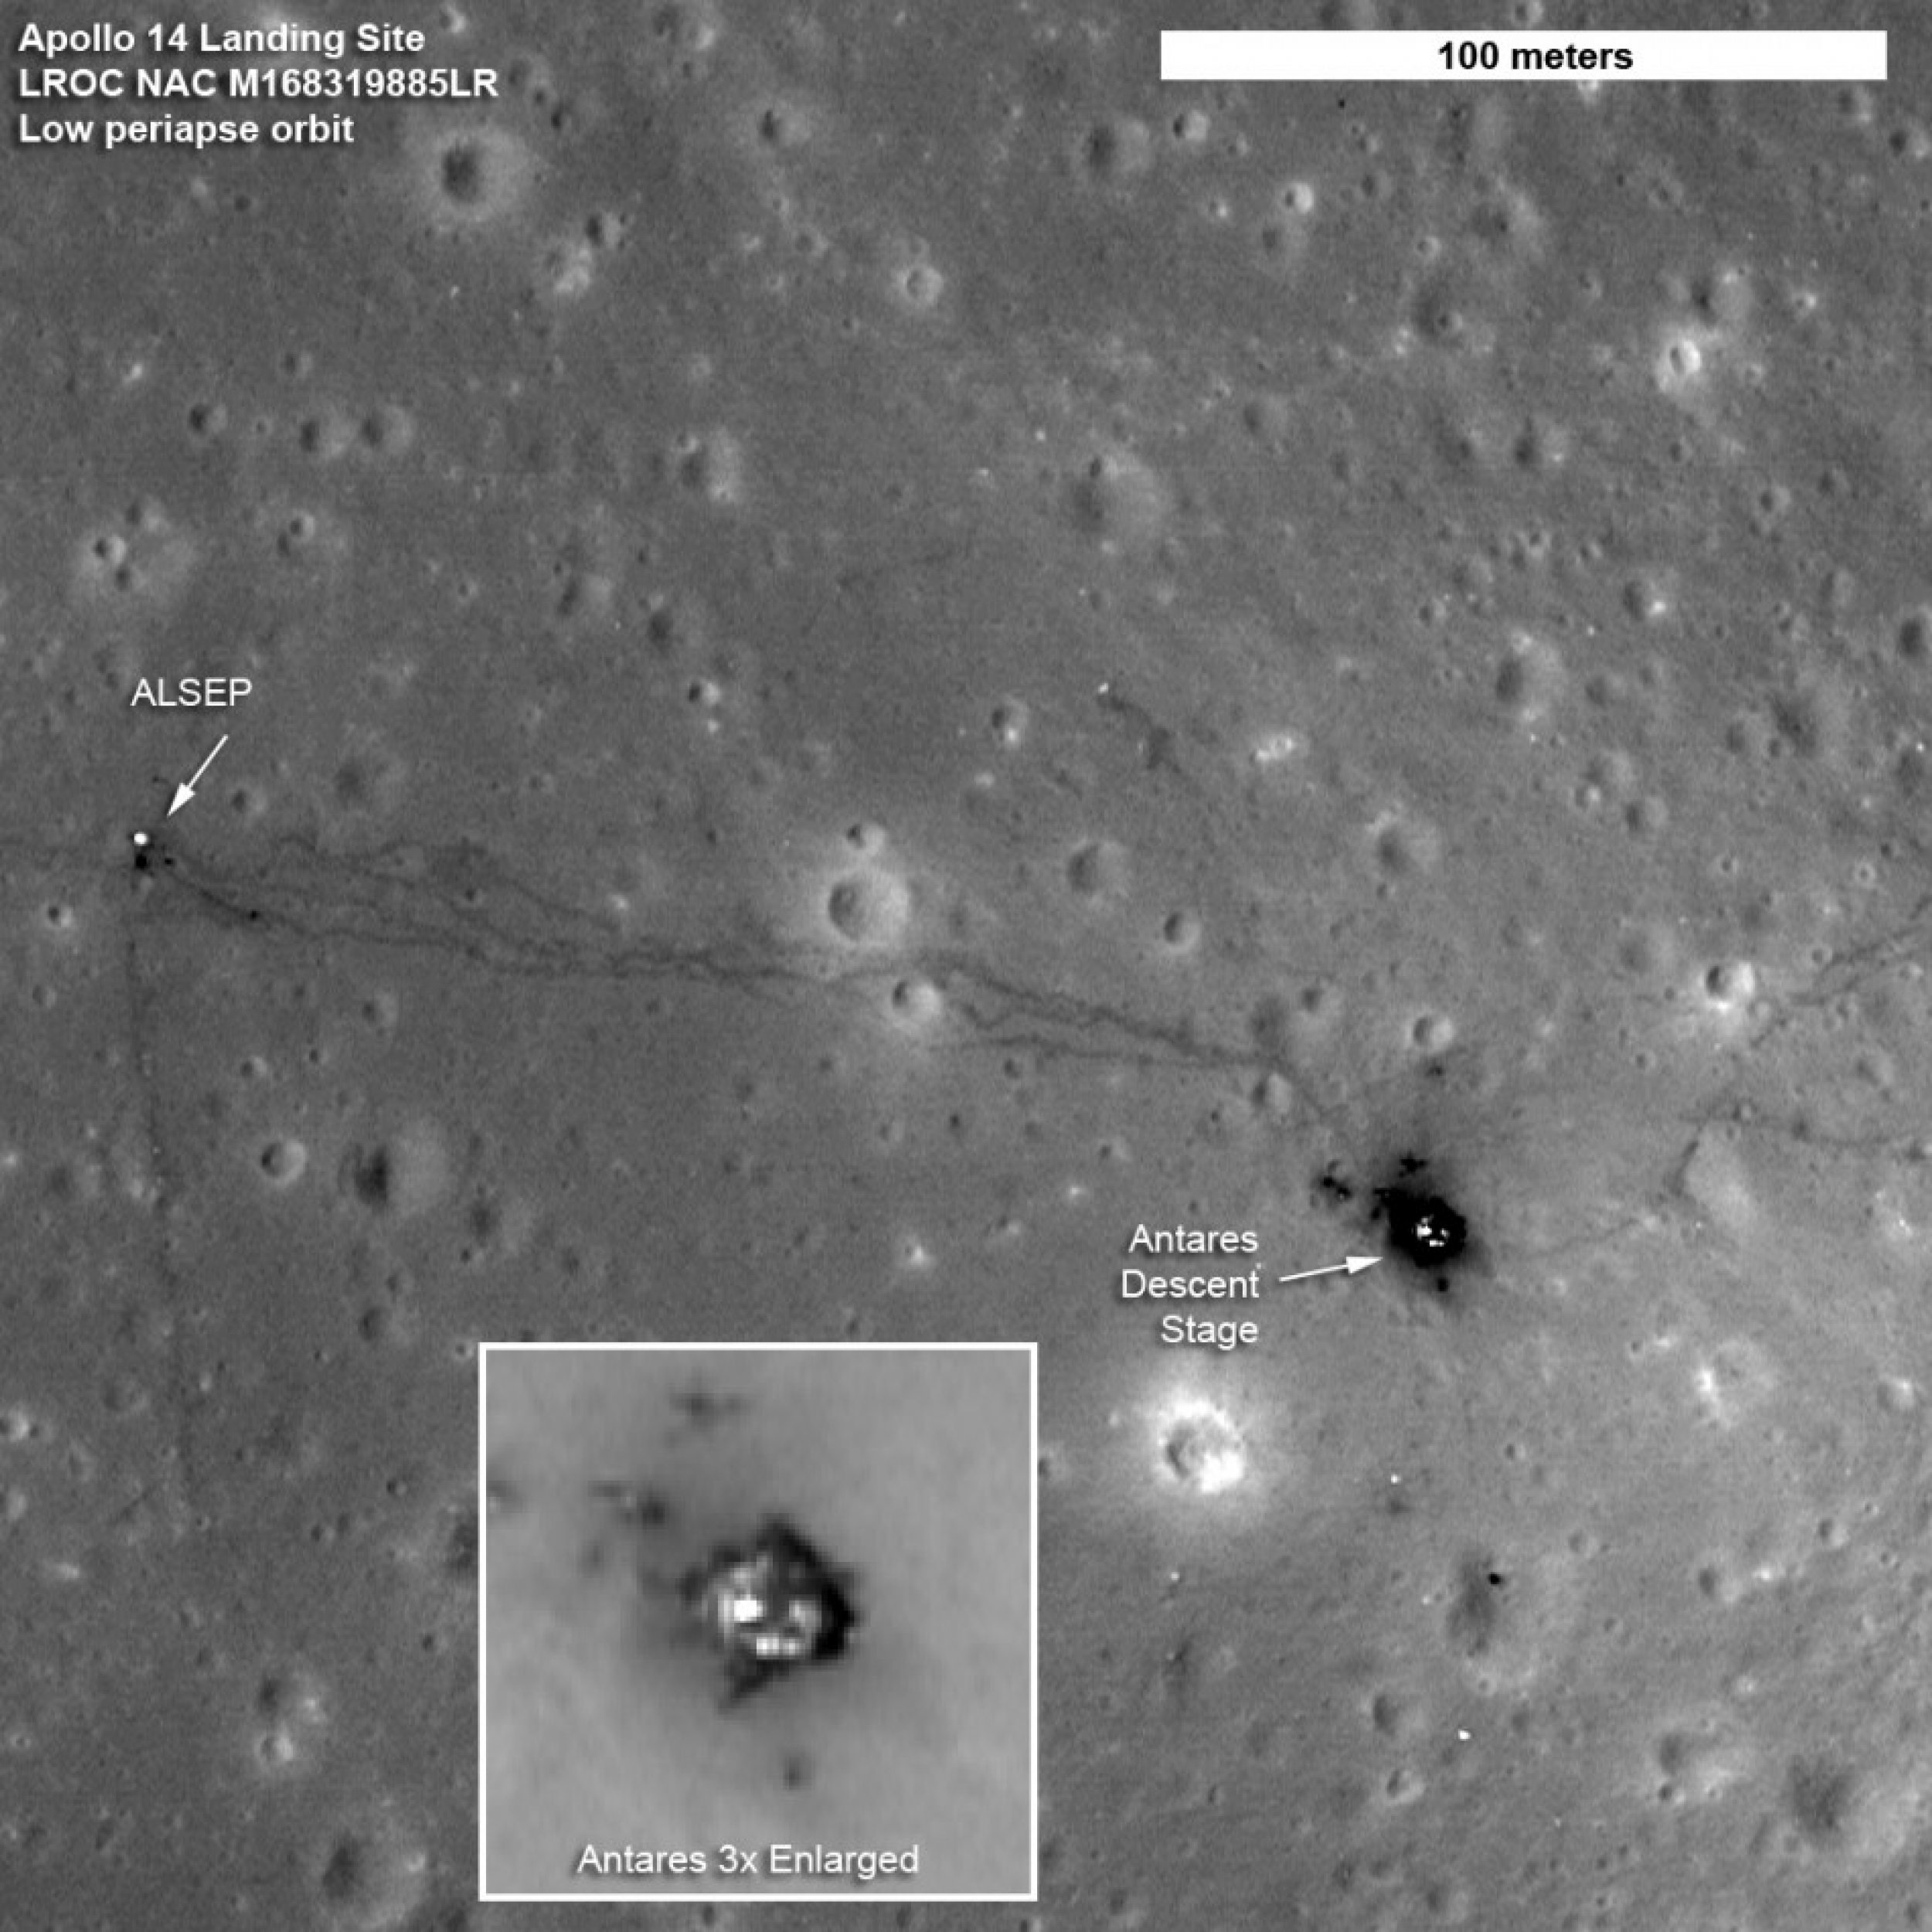 LRO Image of Apollo 14 landing site